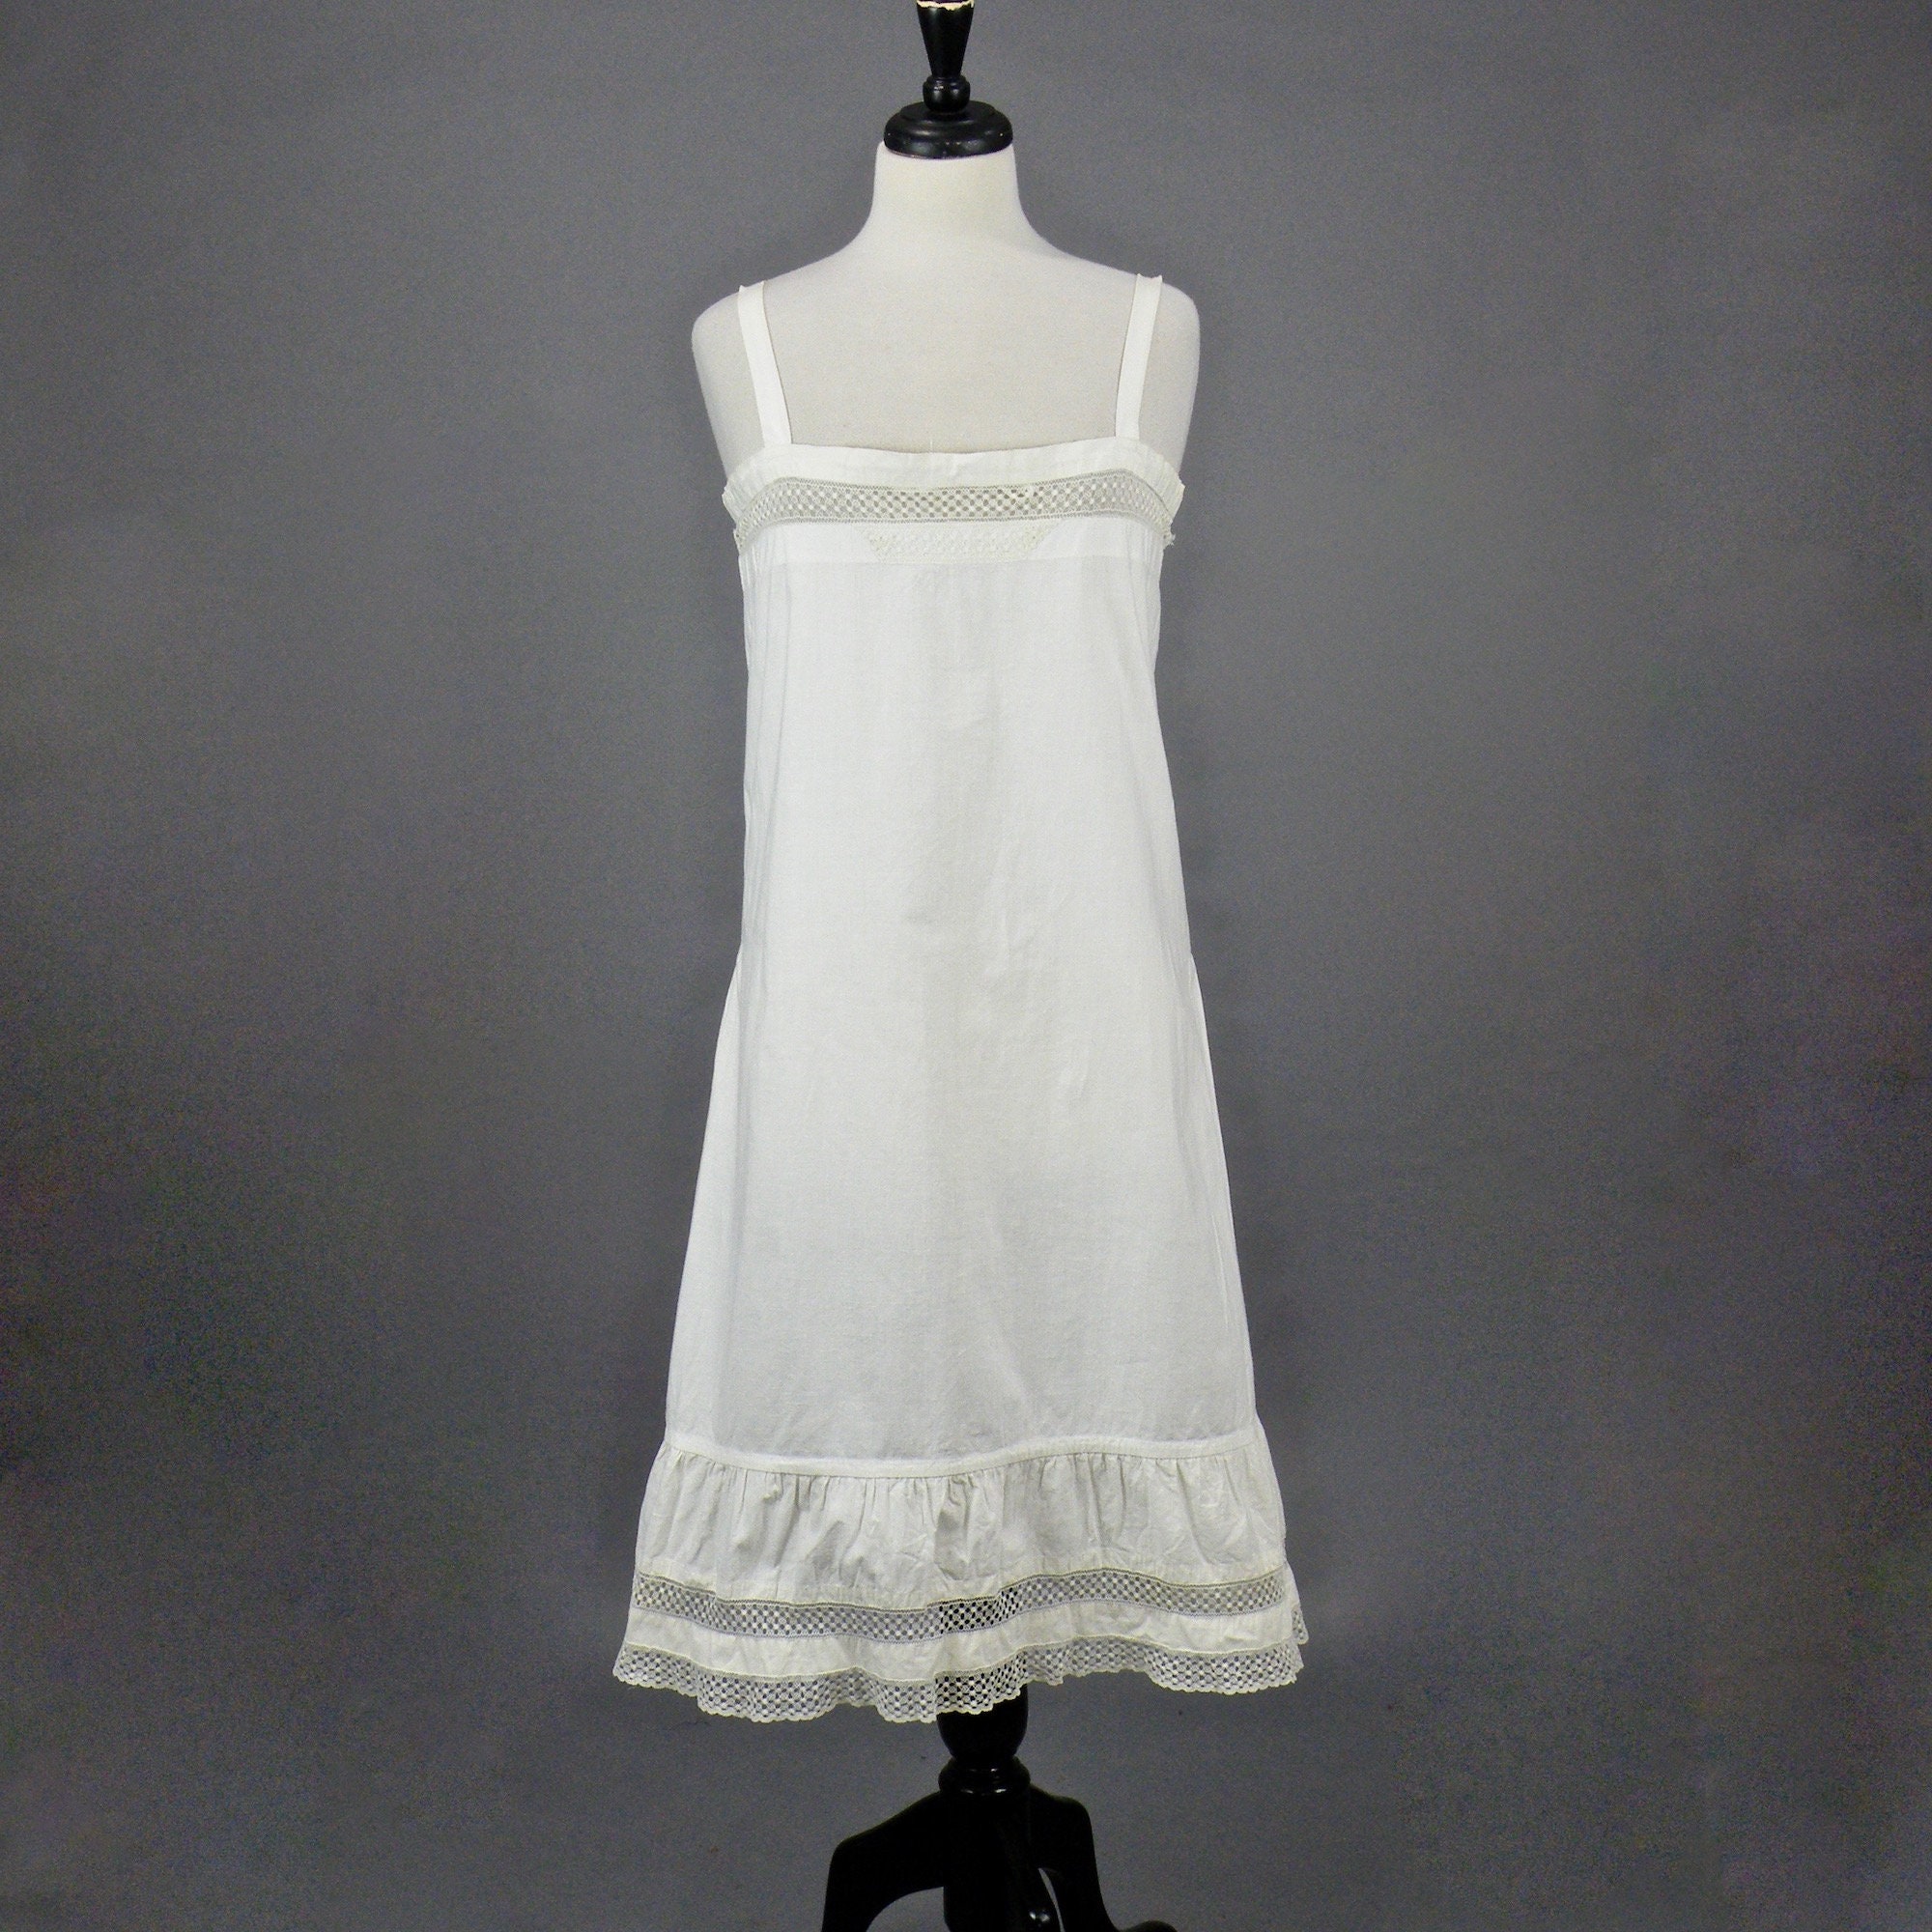 Edwardian 1910s White Cotton Chemise Dress, Antique Slip Dress with ...